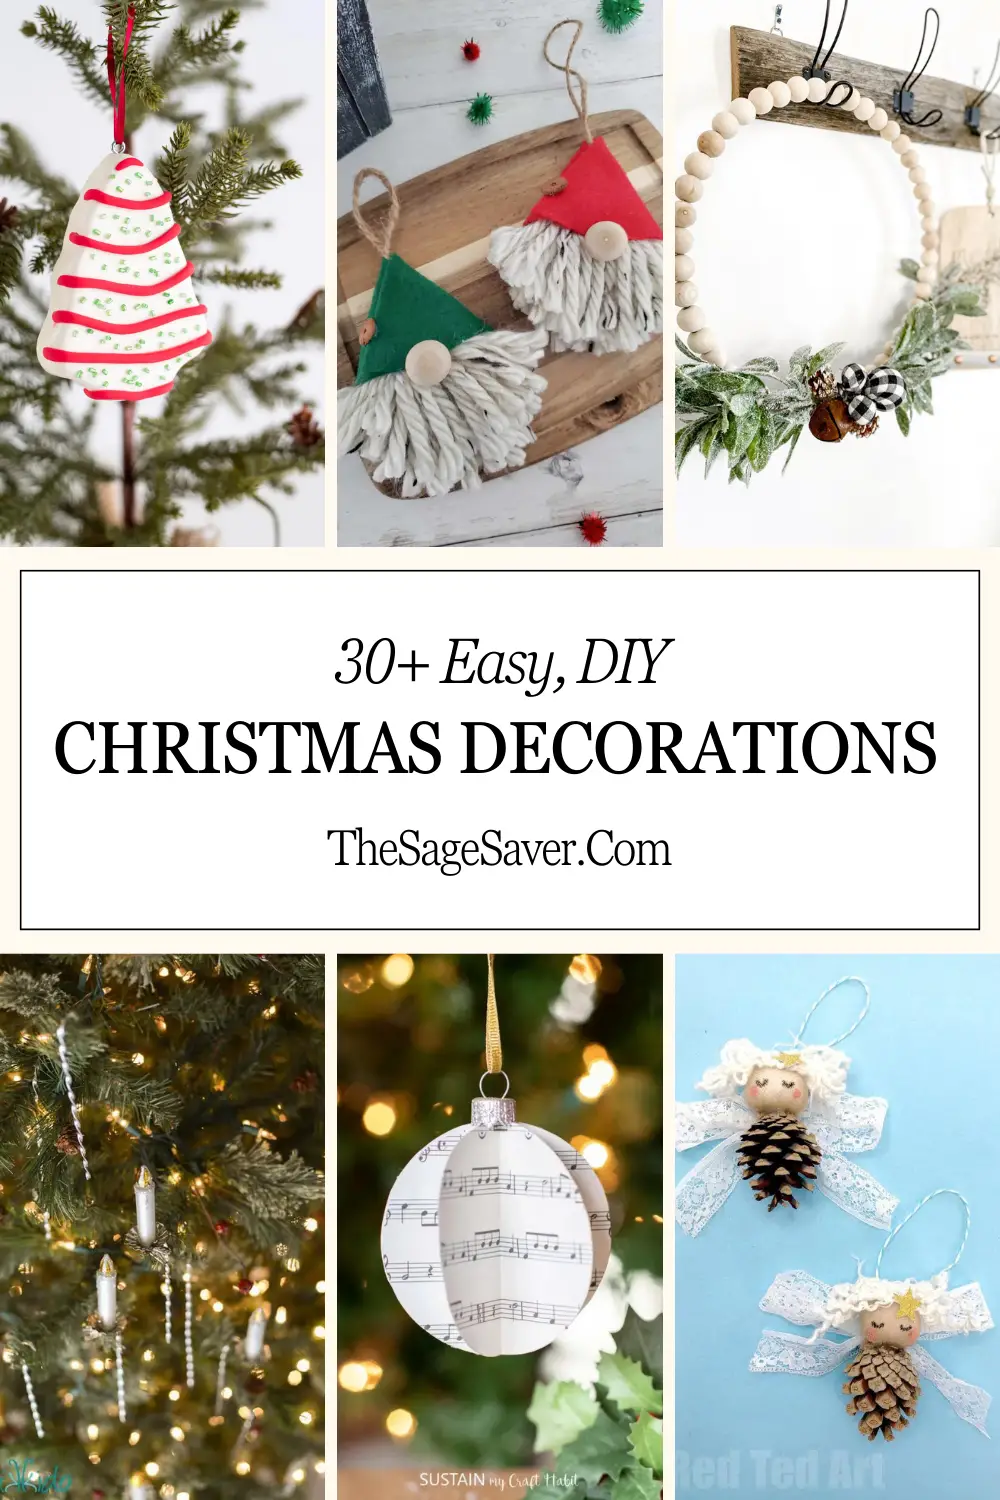 How to Make Easy Homemade Christmas Decorations